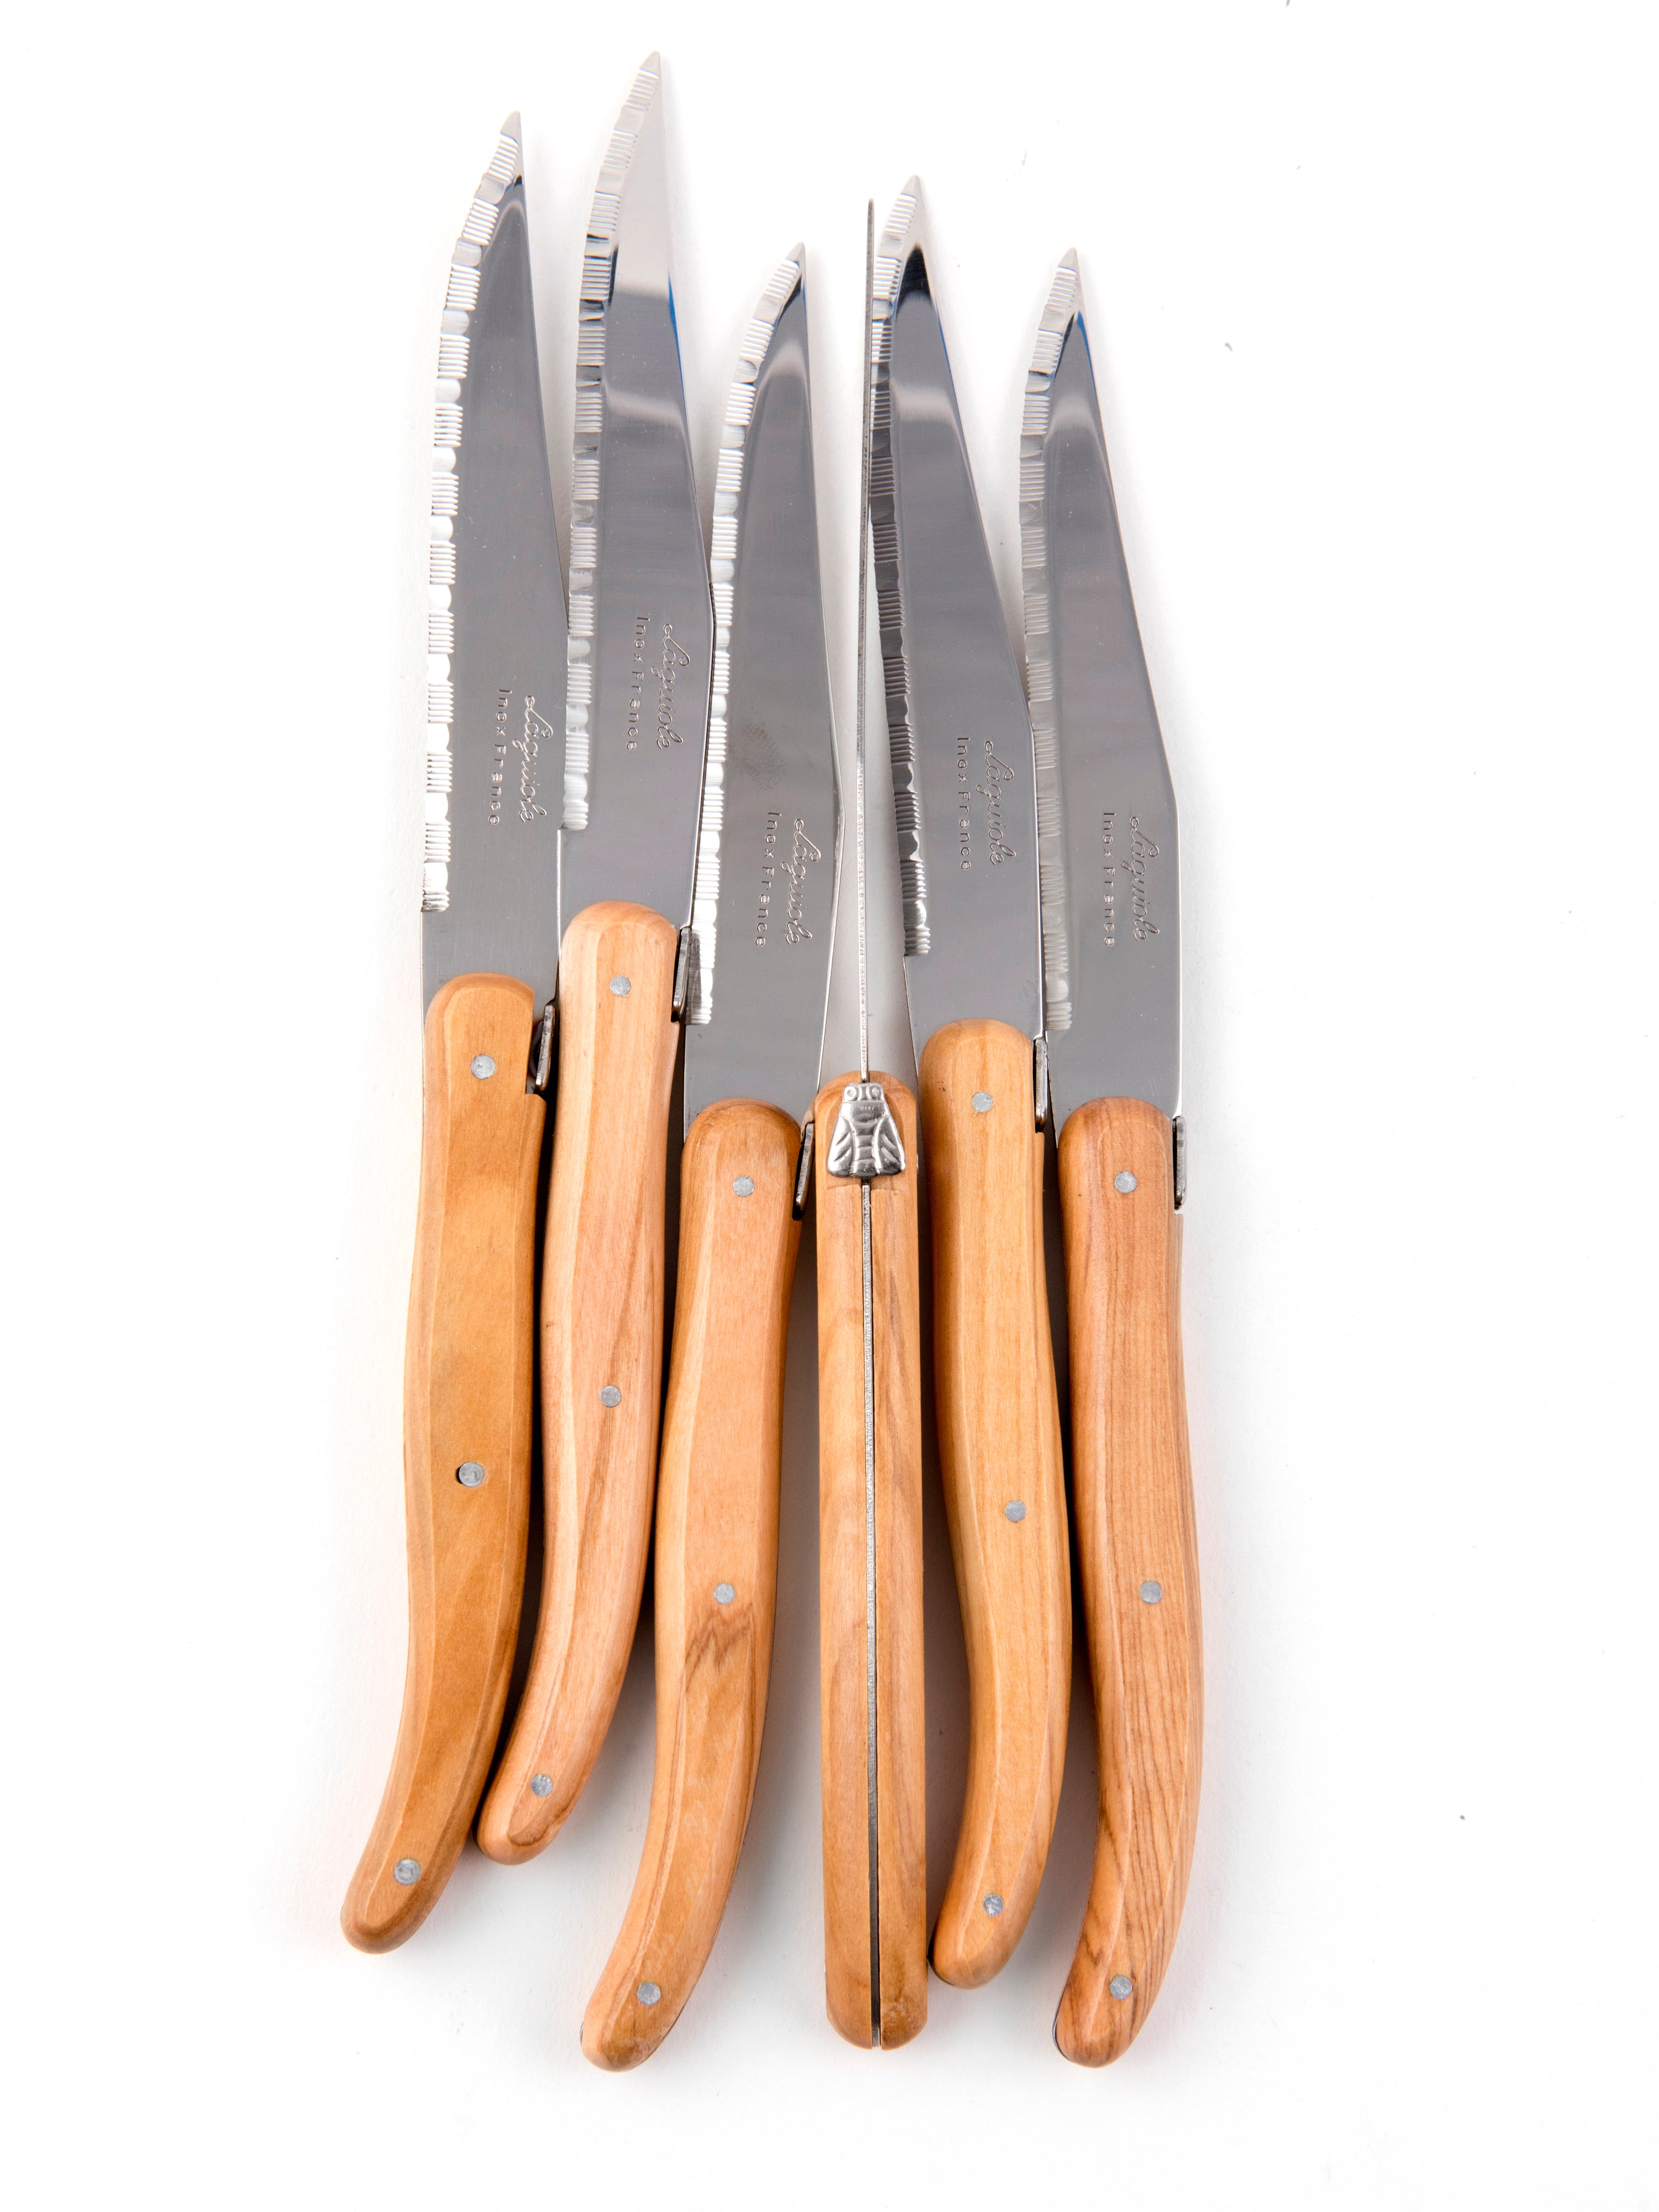 Laguiole Olivewood Knives in Wooden Box with Acrylic Lid (Set of 6) Cutlery Laguiole Brand_Laguiole Flatware Sets Kitchen_Dinnerware Kitchen_Kitchenware Laguiole DSC3636_JasonLeCras_LG_684518cc-e7b2-408f-9f2e-cb605e1227e9